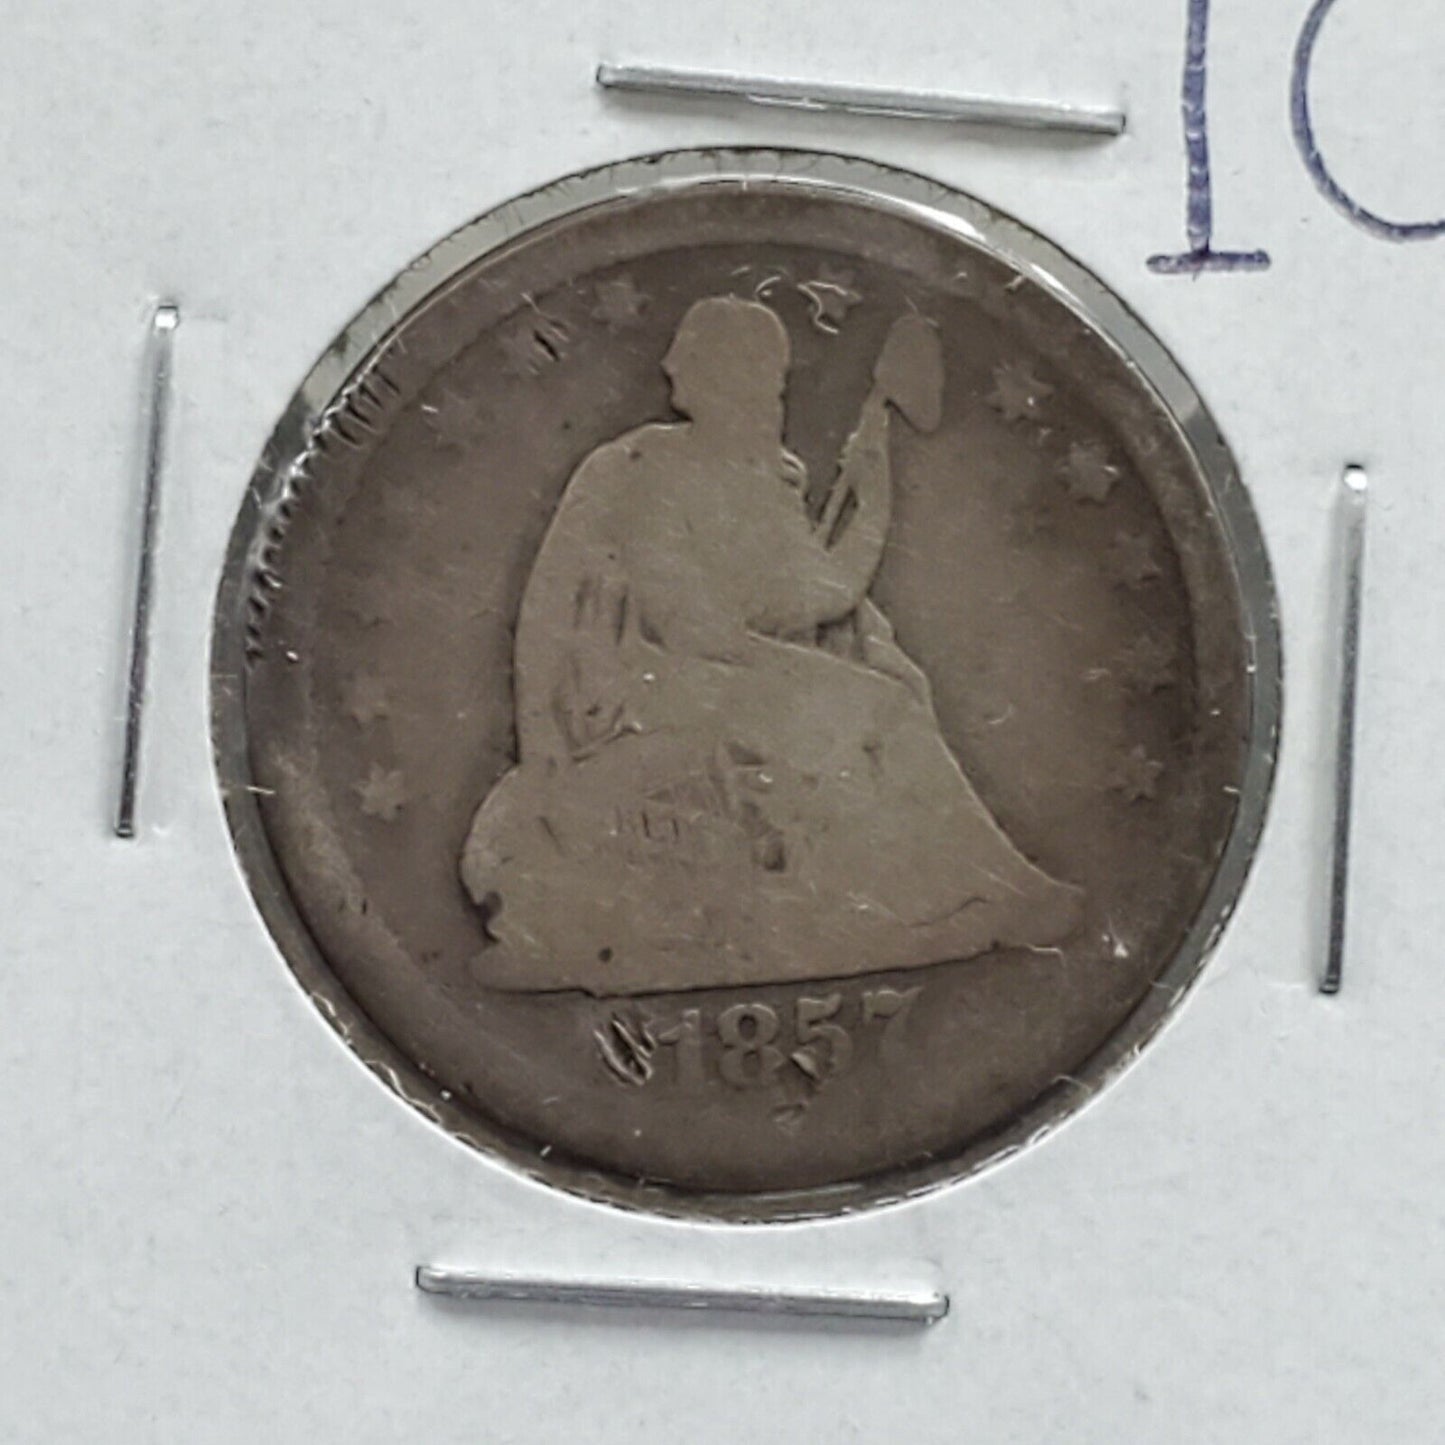 1857 P Seated Liberty Silver Quarter Coin Choice Circulated Condition